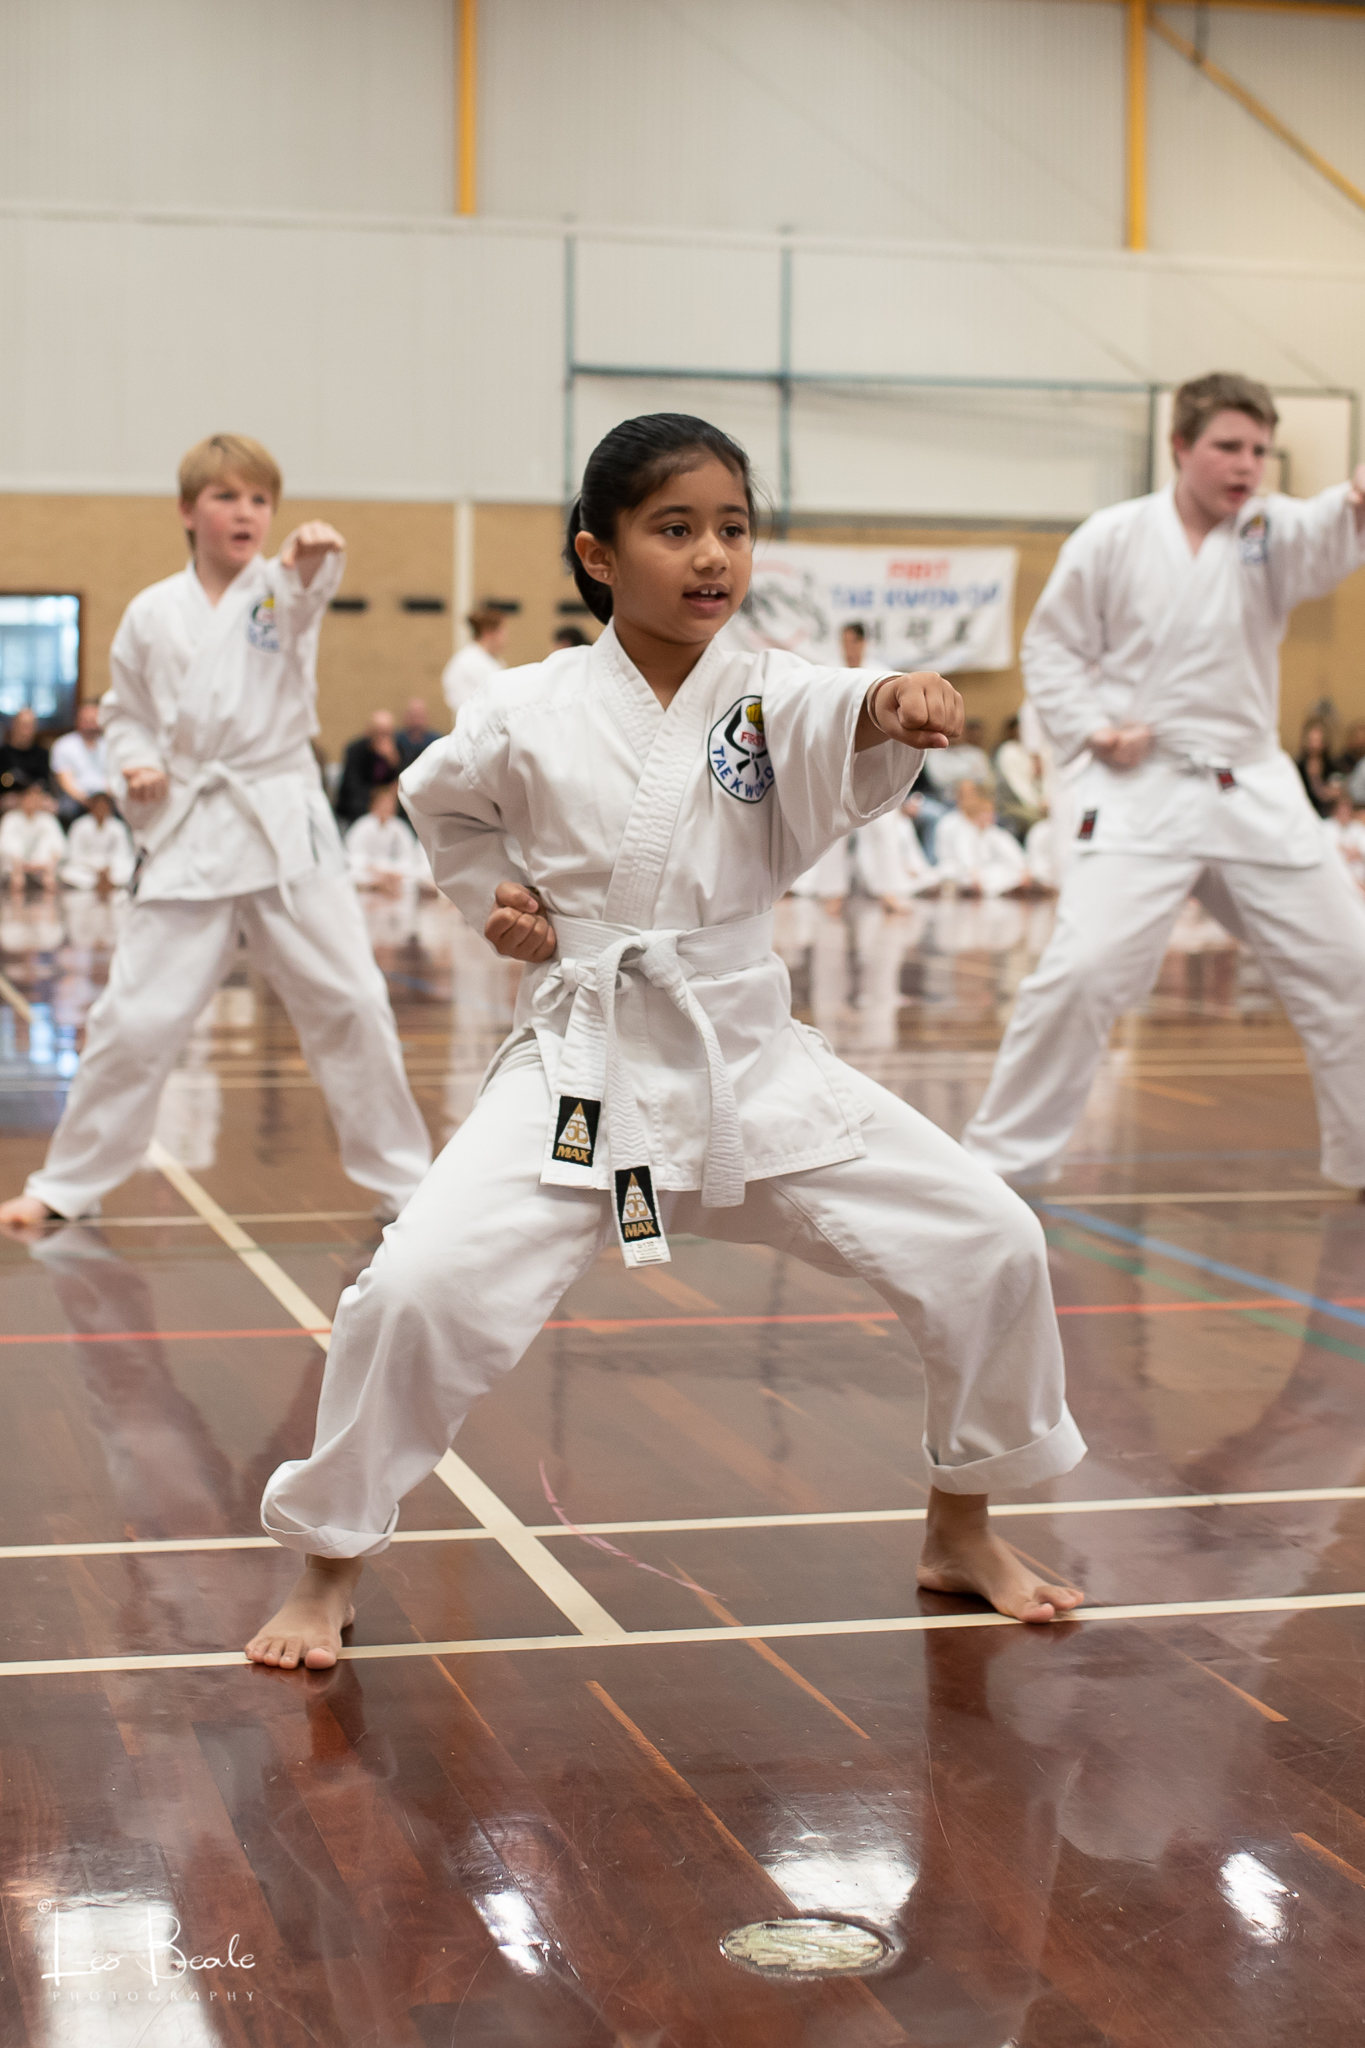 First Taekwondo Perth girl horse riding stance punch